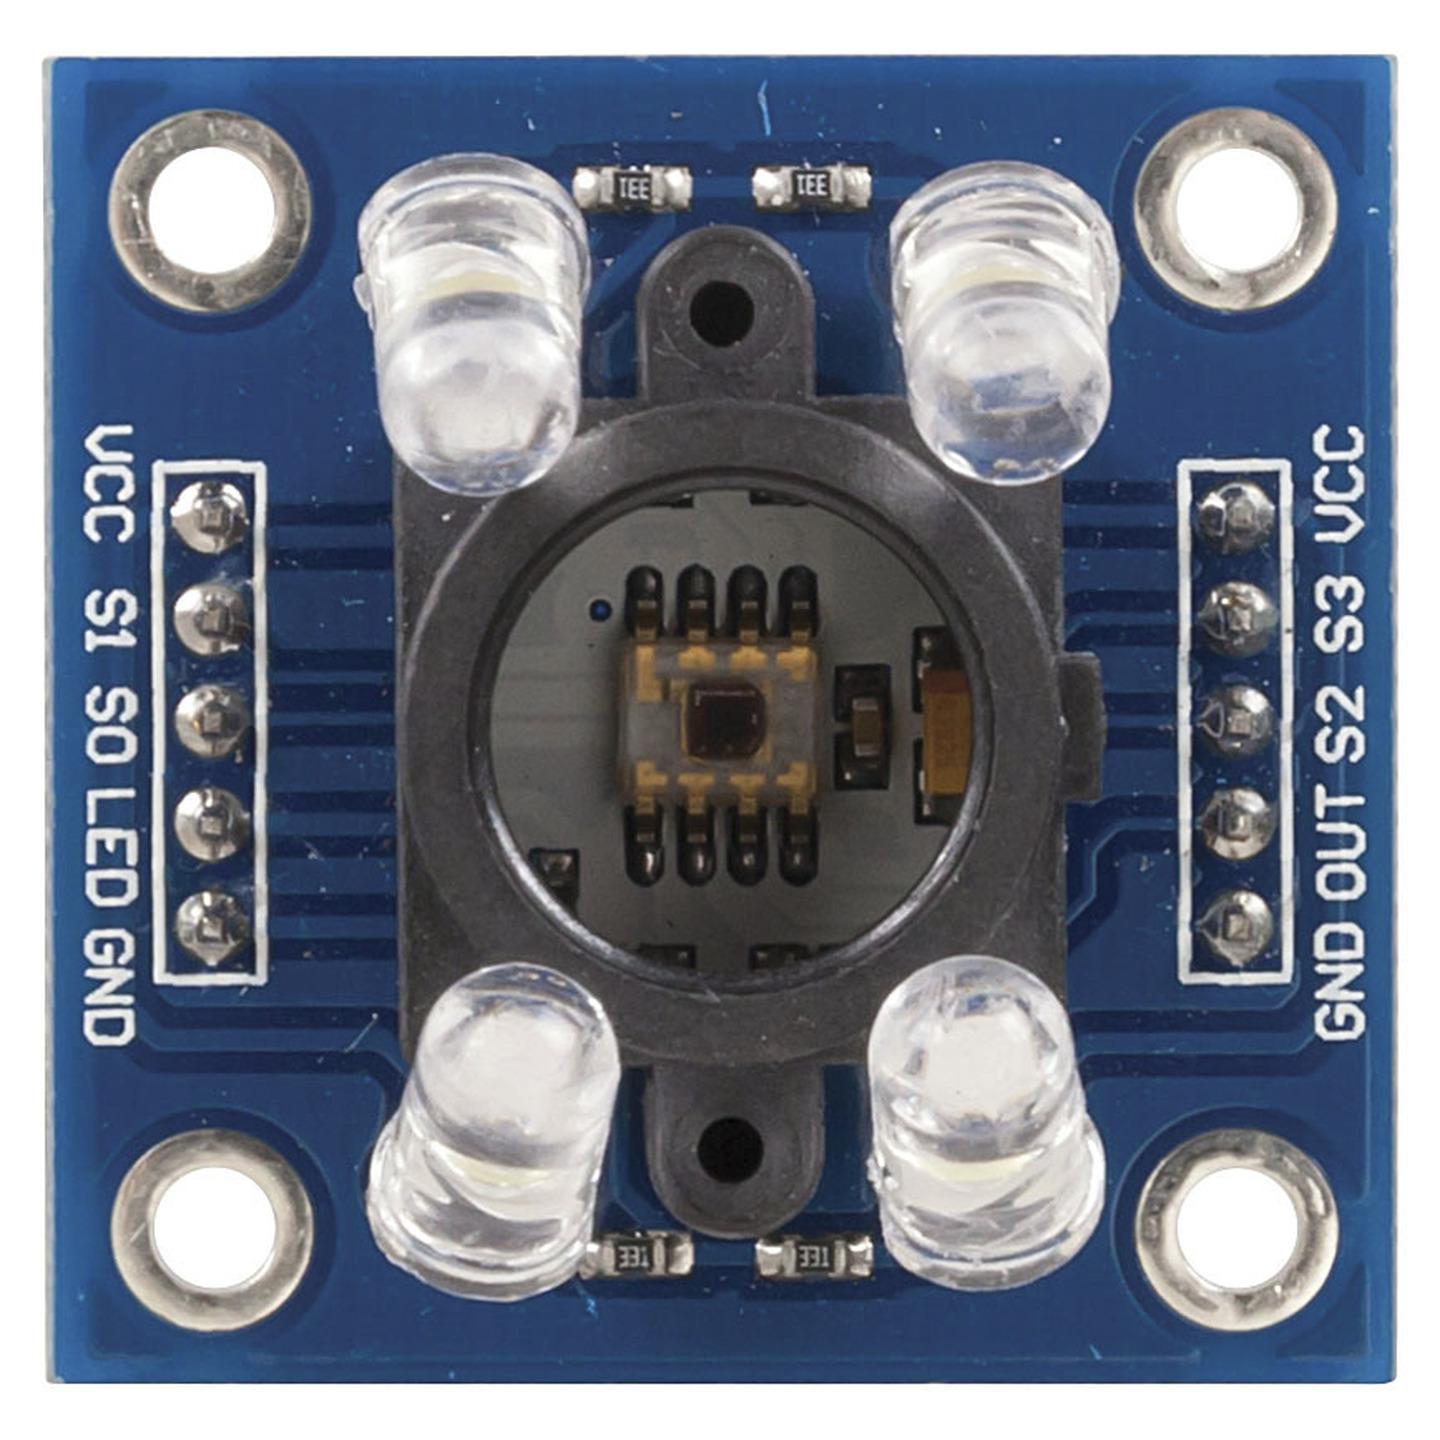 Arduino Compatible Colour Sensor Module